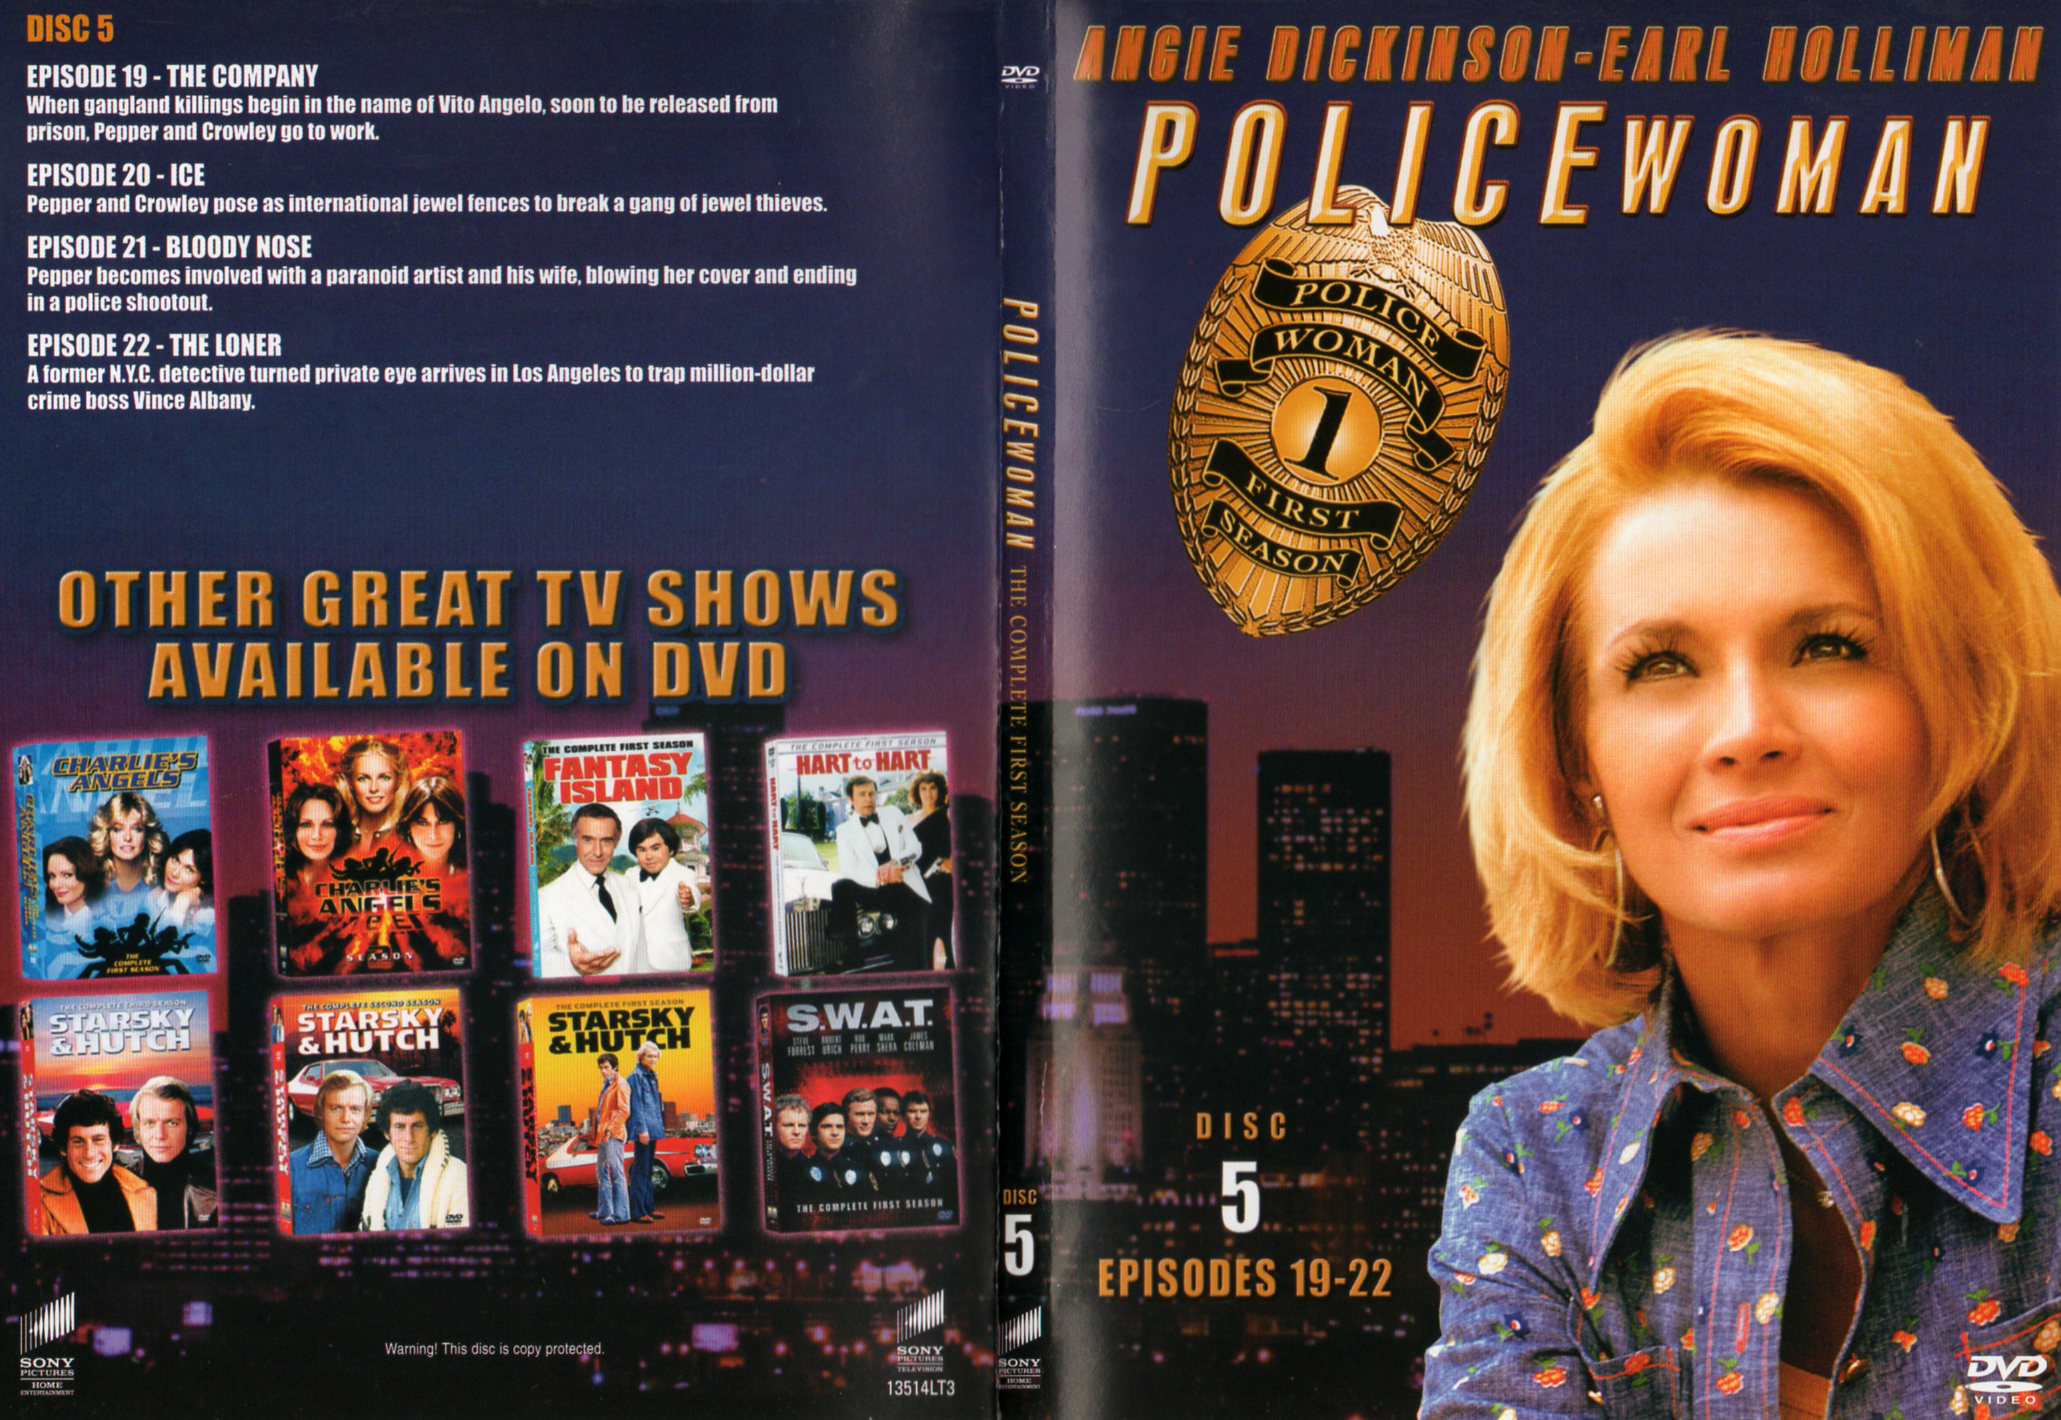 Jaquette DVD Police Woman Saison 1 DVD 3 Zone 1